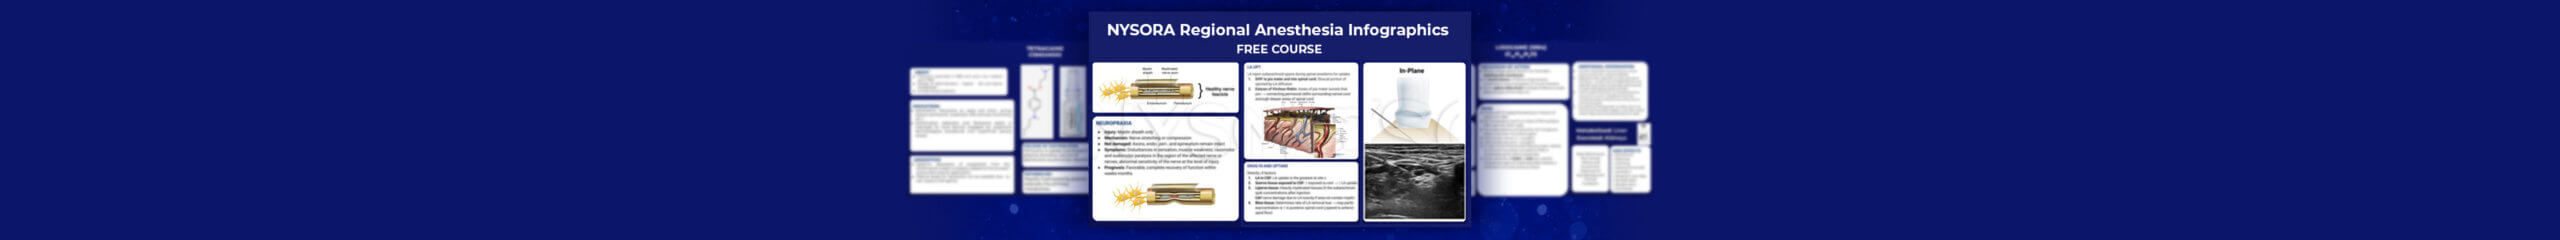 NYSORA Regional Anesthesia Infographic (Open Course)